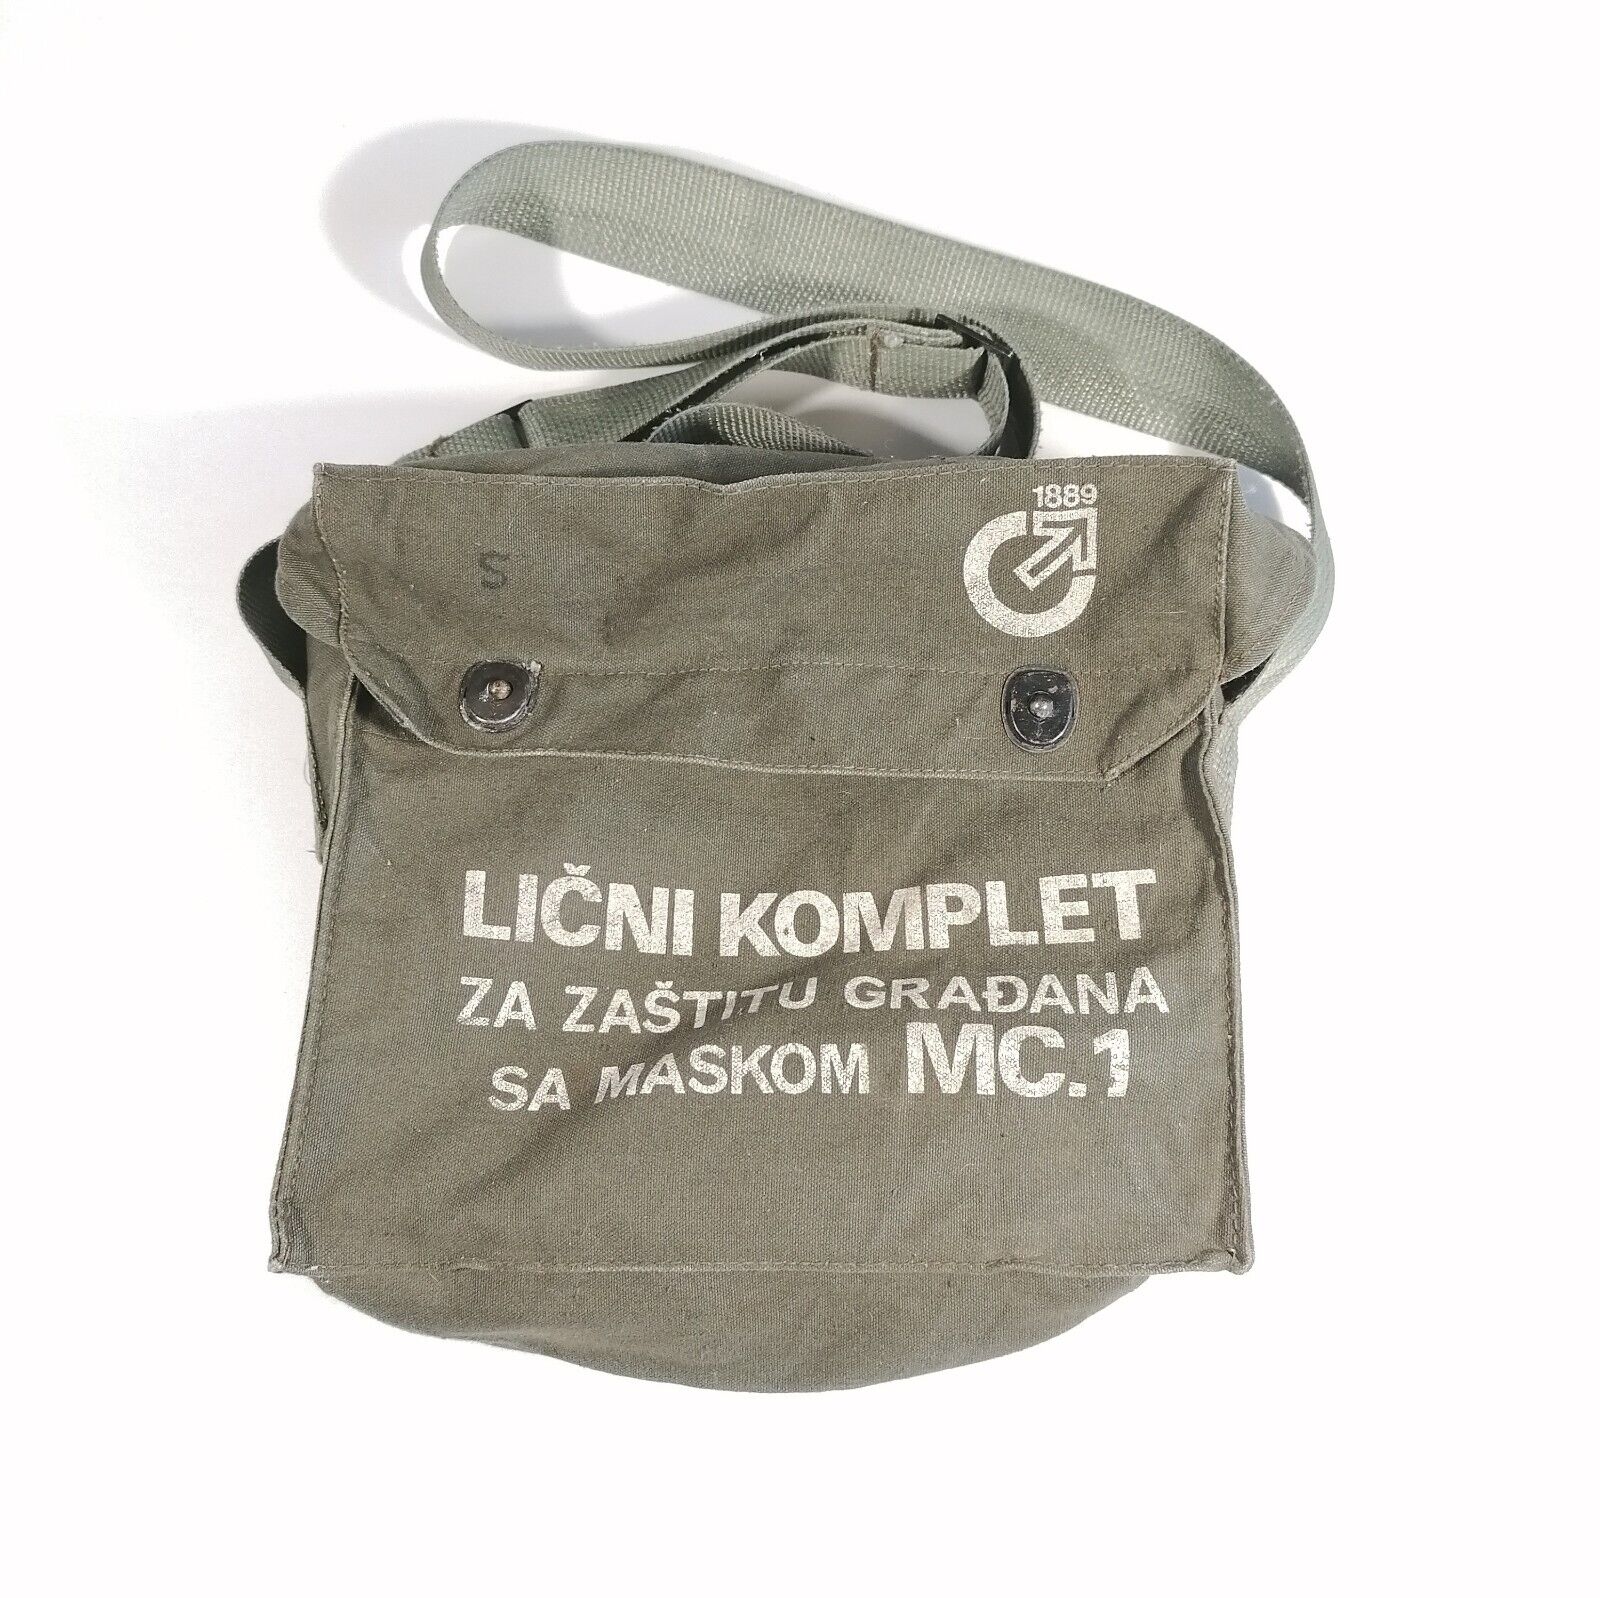 Genuine Yugoslavian Military Bag From Personal Protection Kit Citizen Rucksack